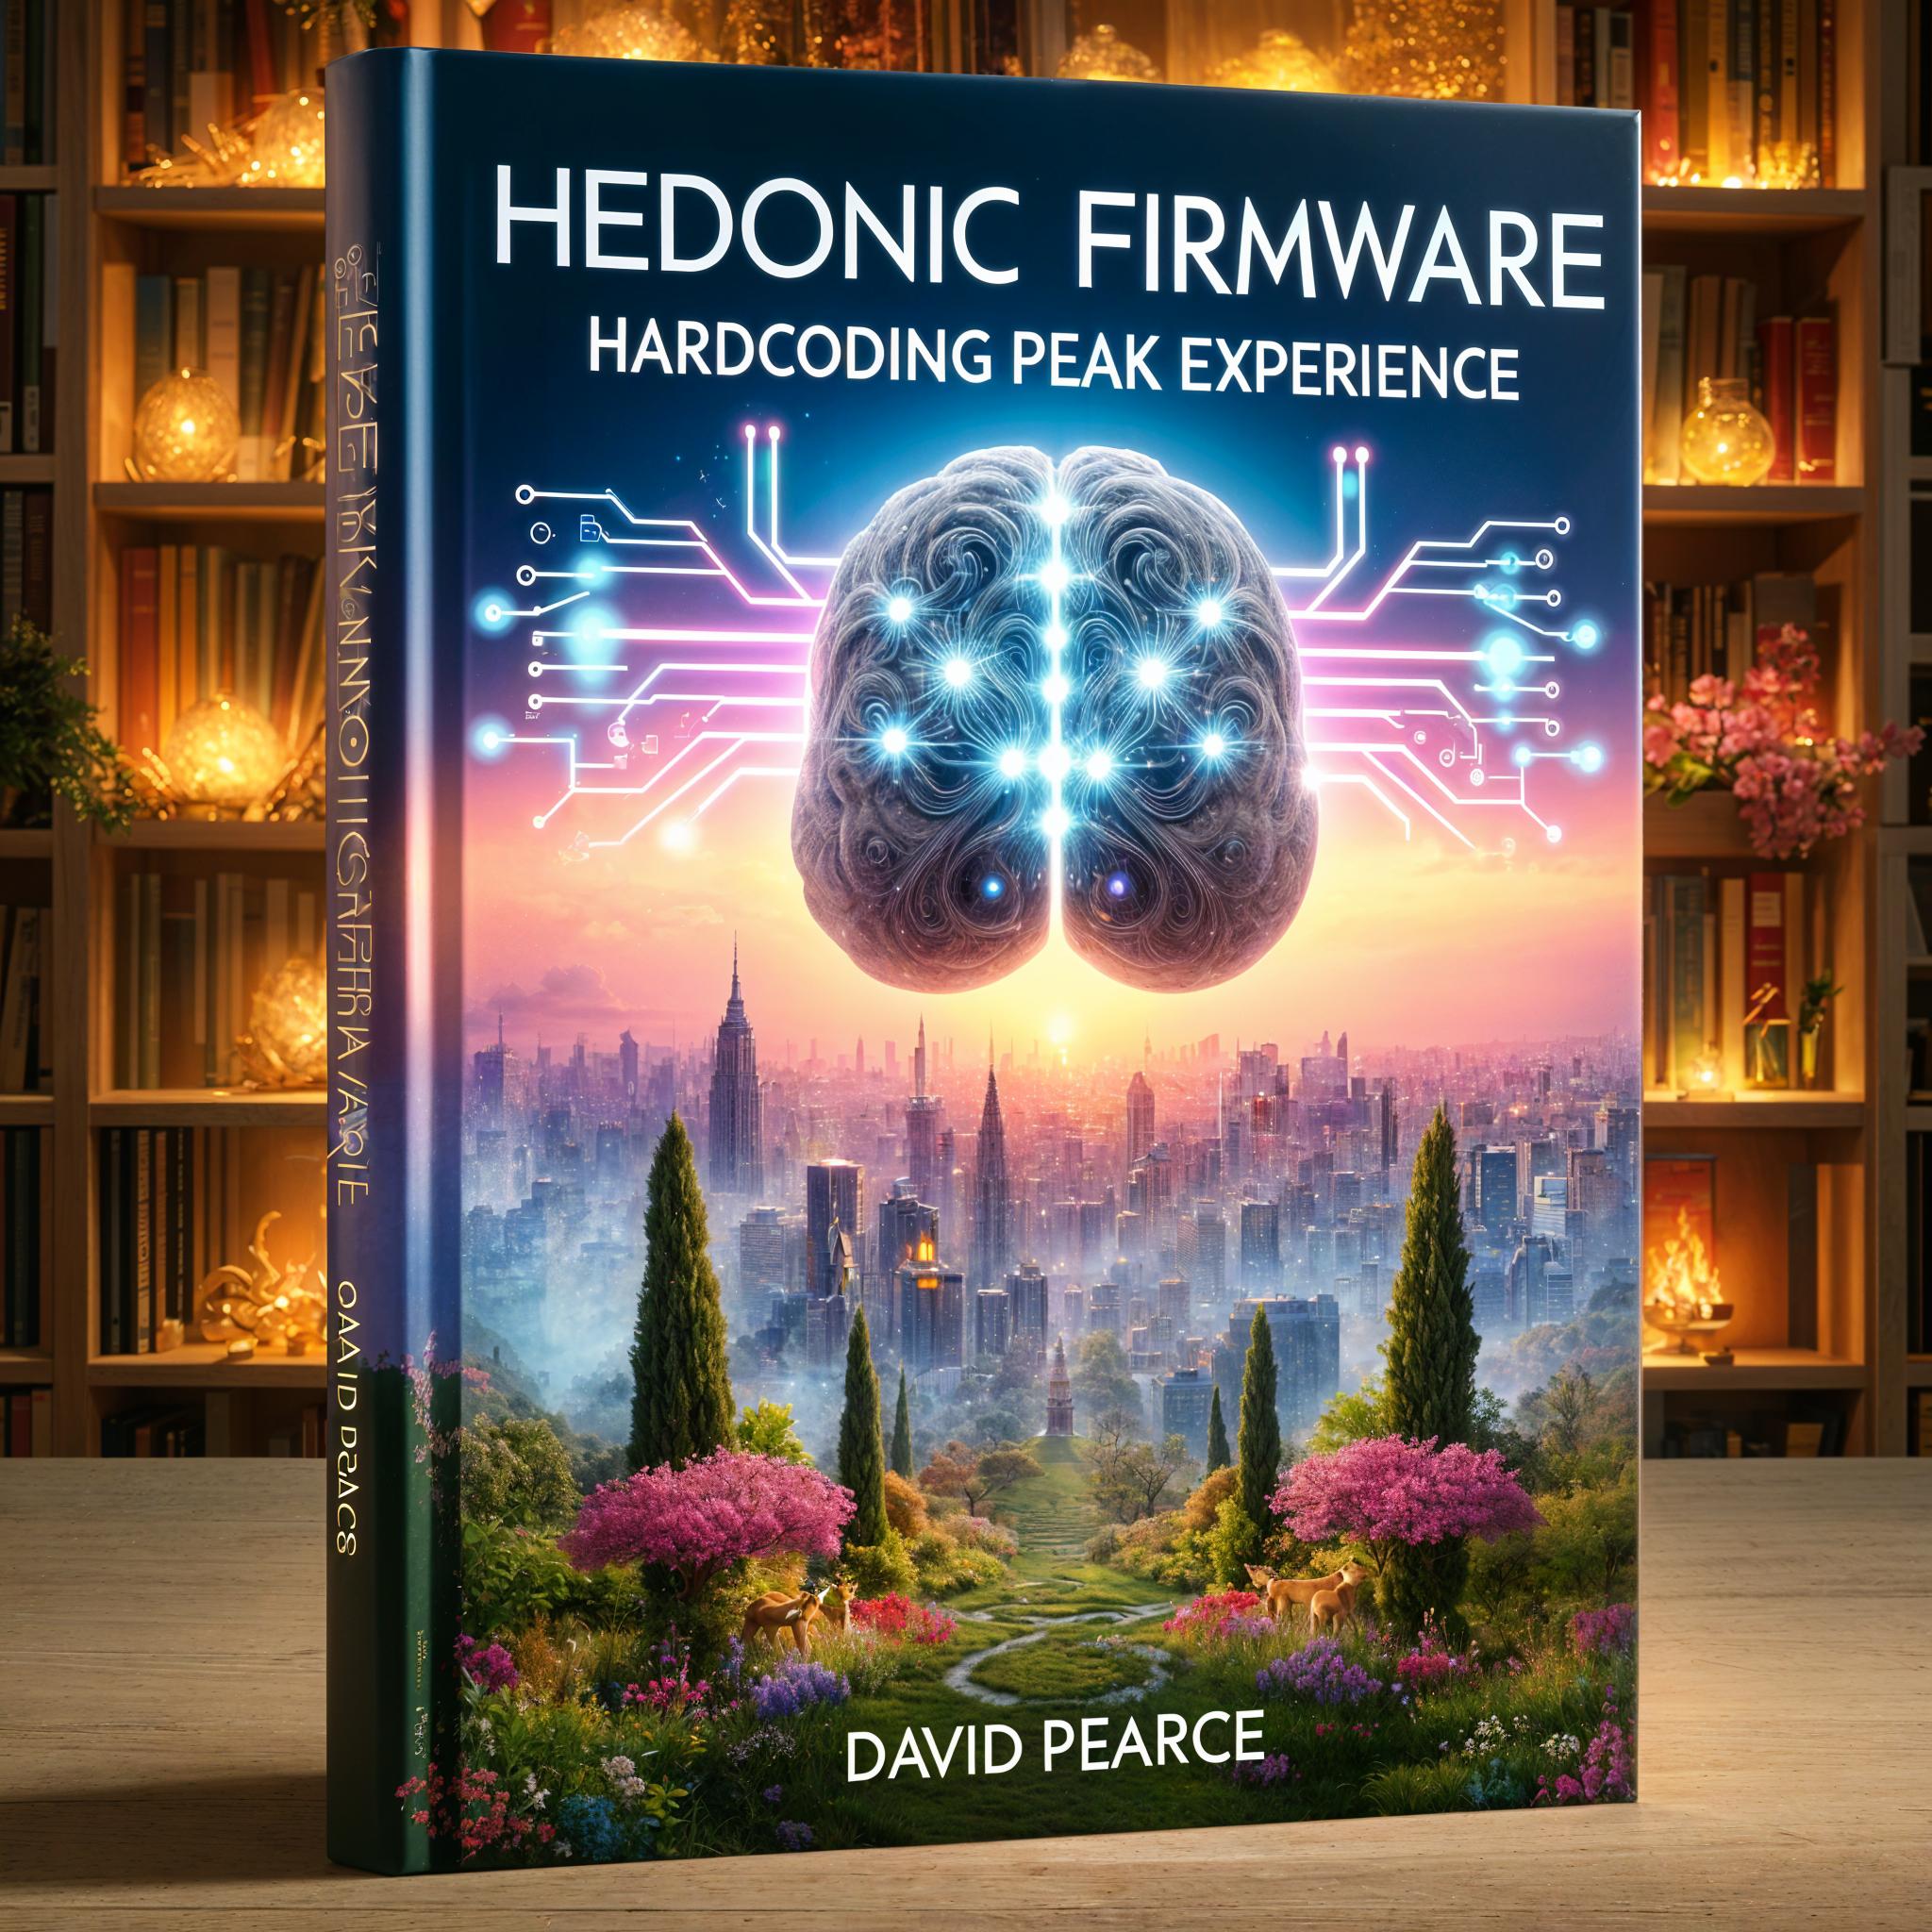 Hedonic Firmware: Hardcoding Peak Experience by David Pearce